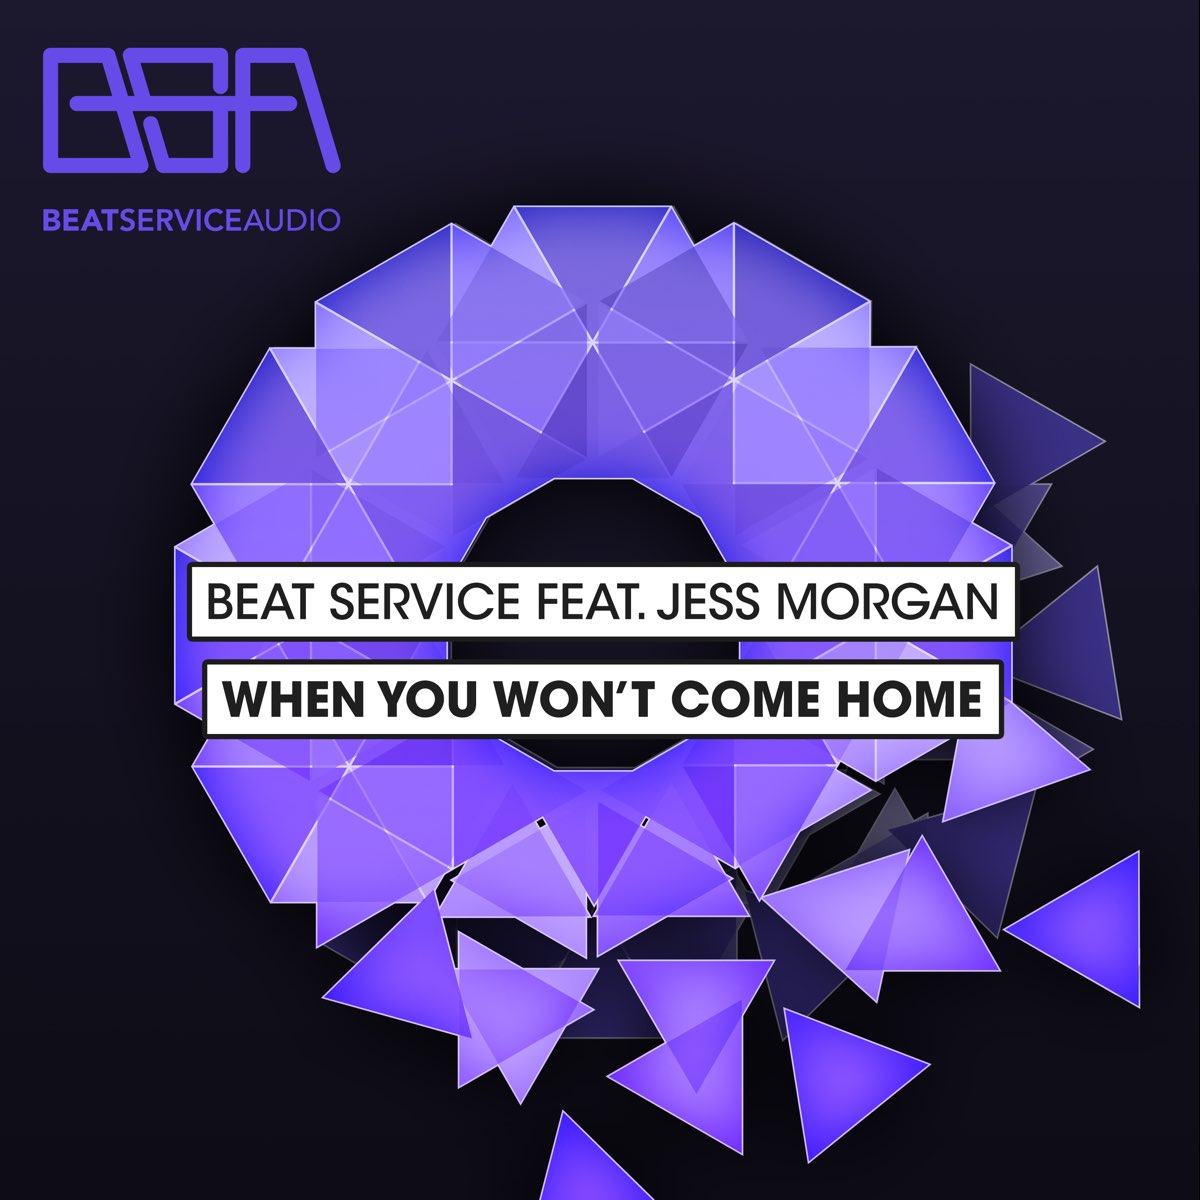 Jes Morgan. Битс-сервис. Whispers Beat service. Feat jess